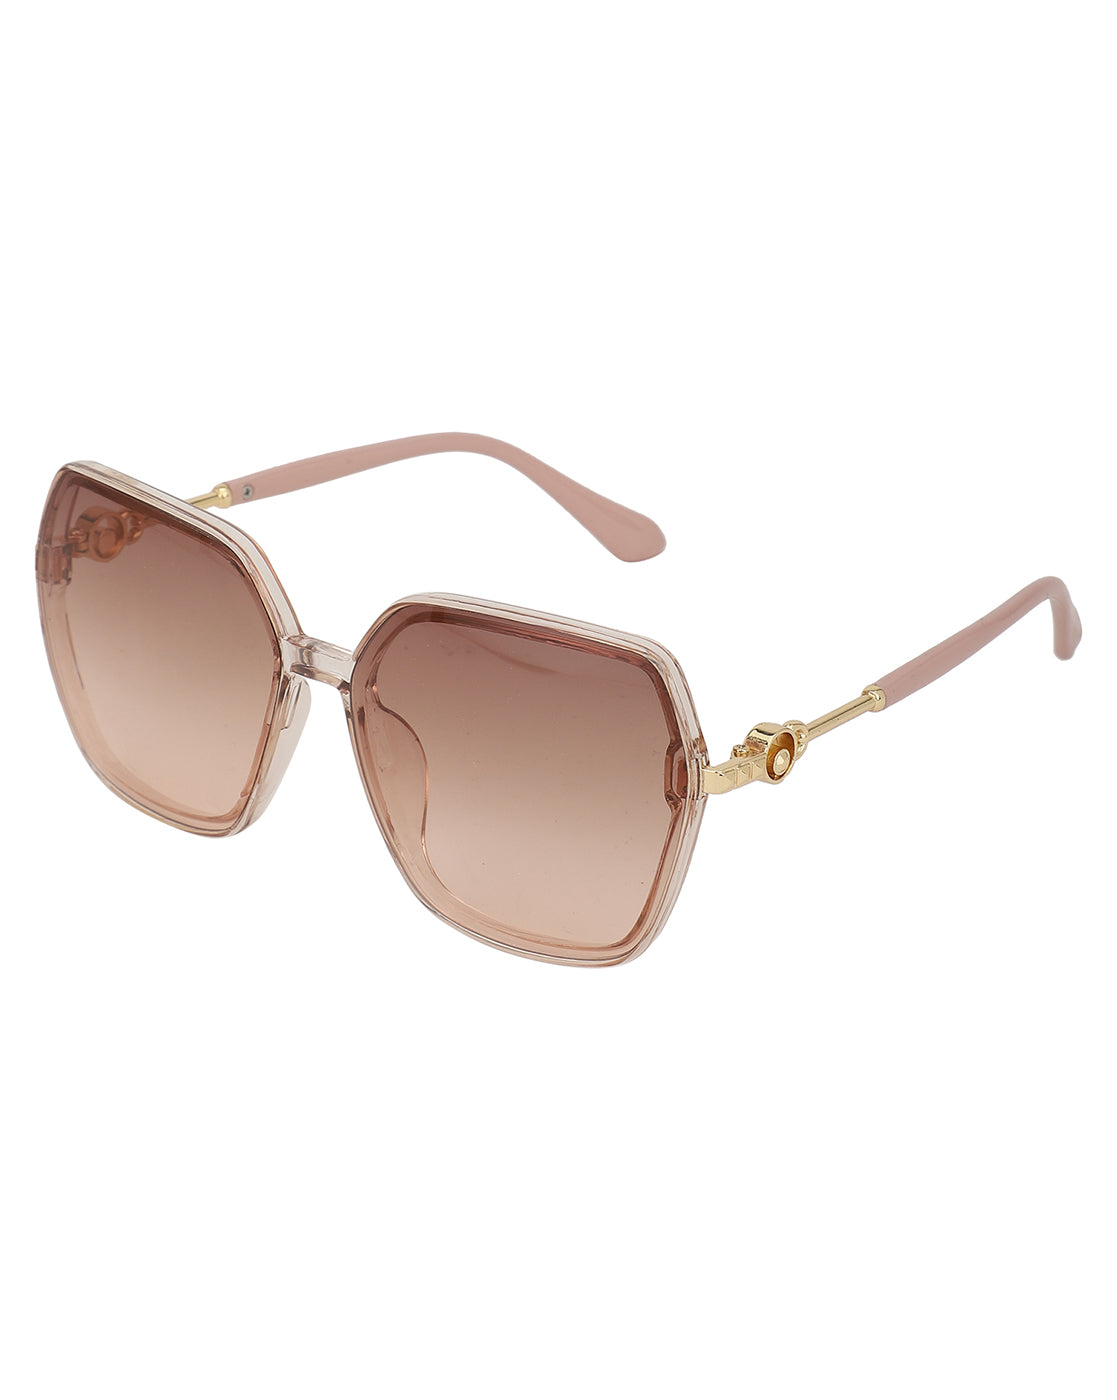 20 Best Sunglasses for Women 2023 - UV Protection Sunglasses